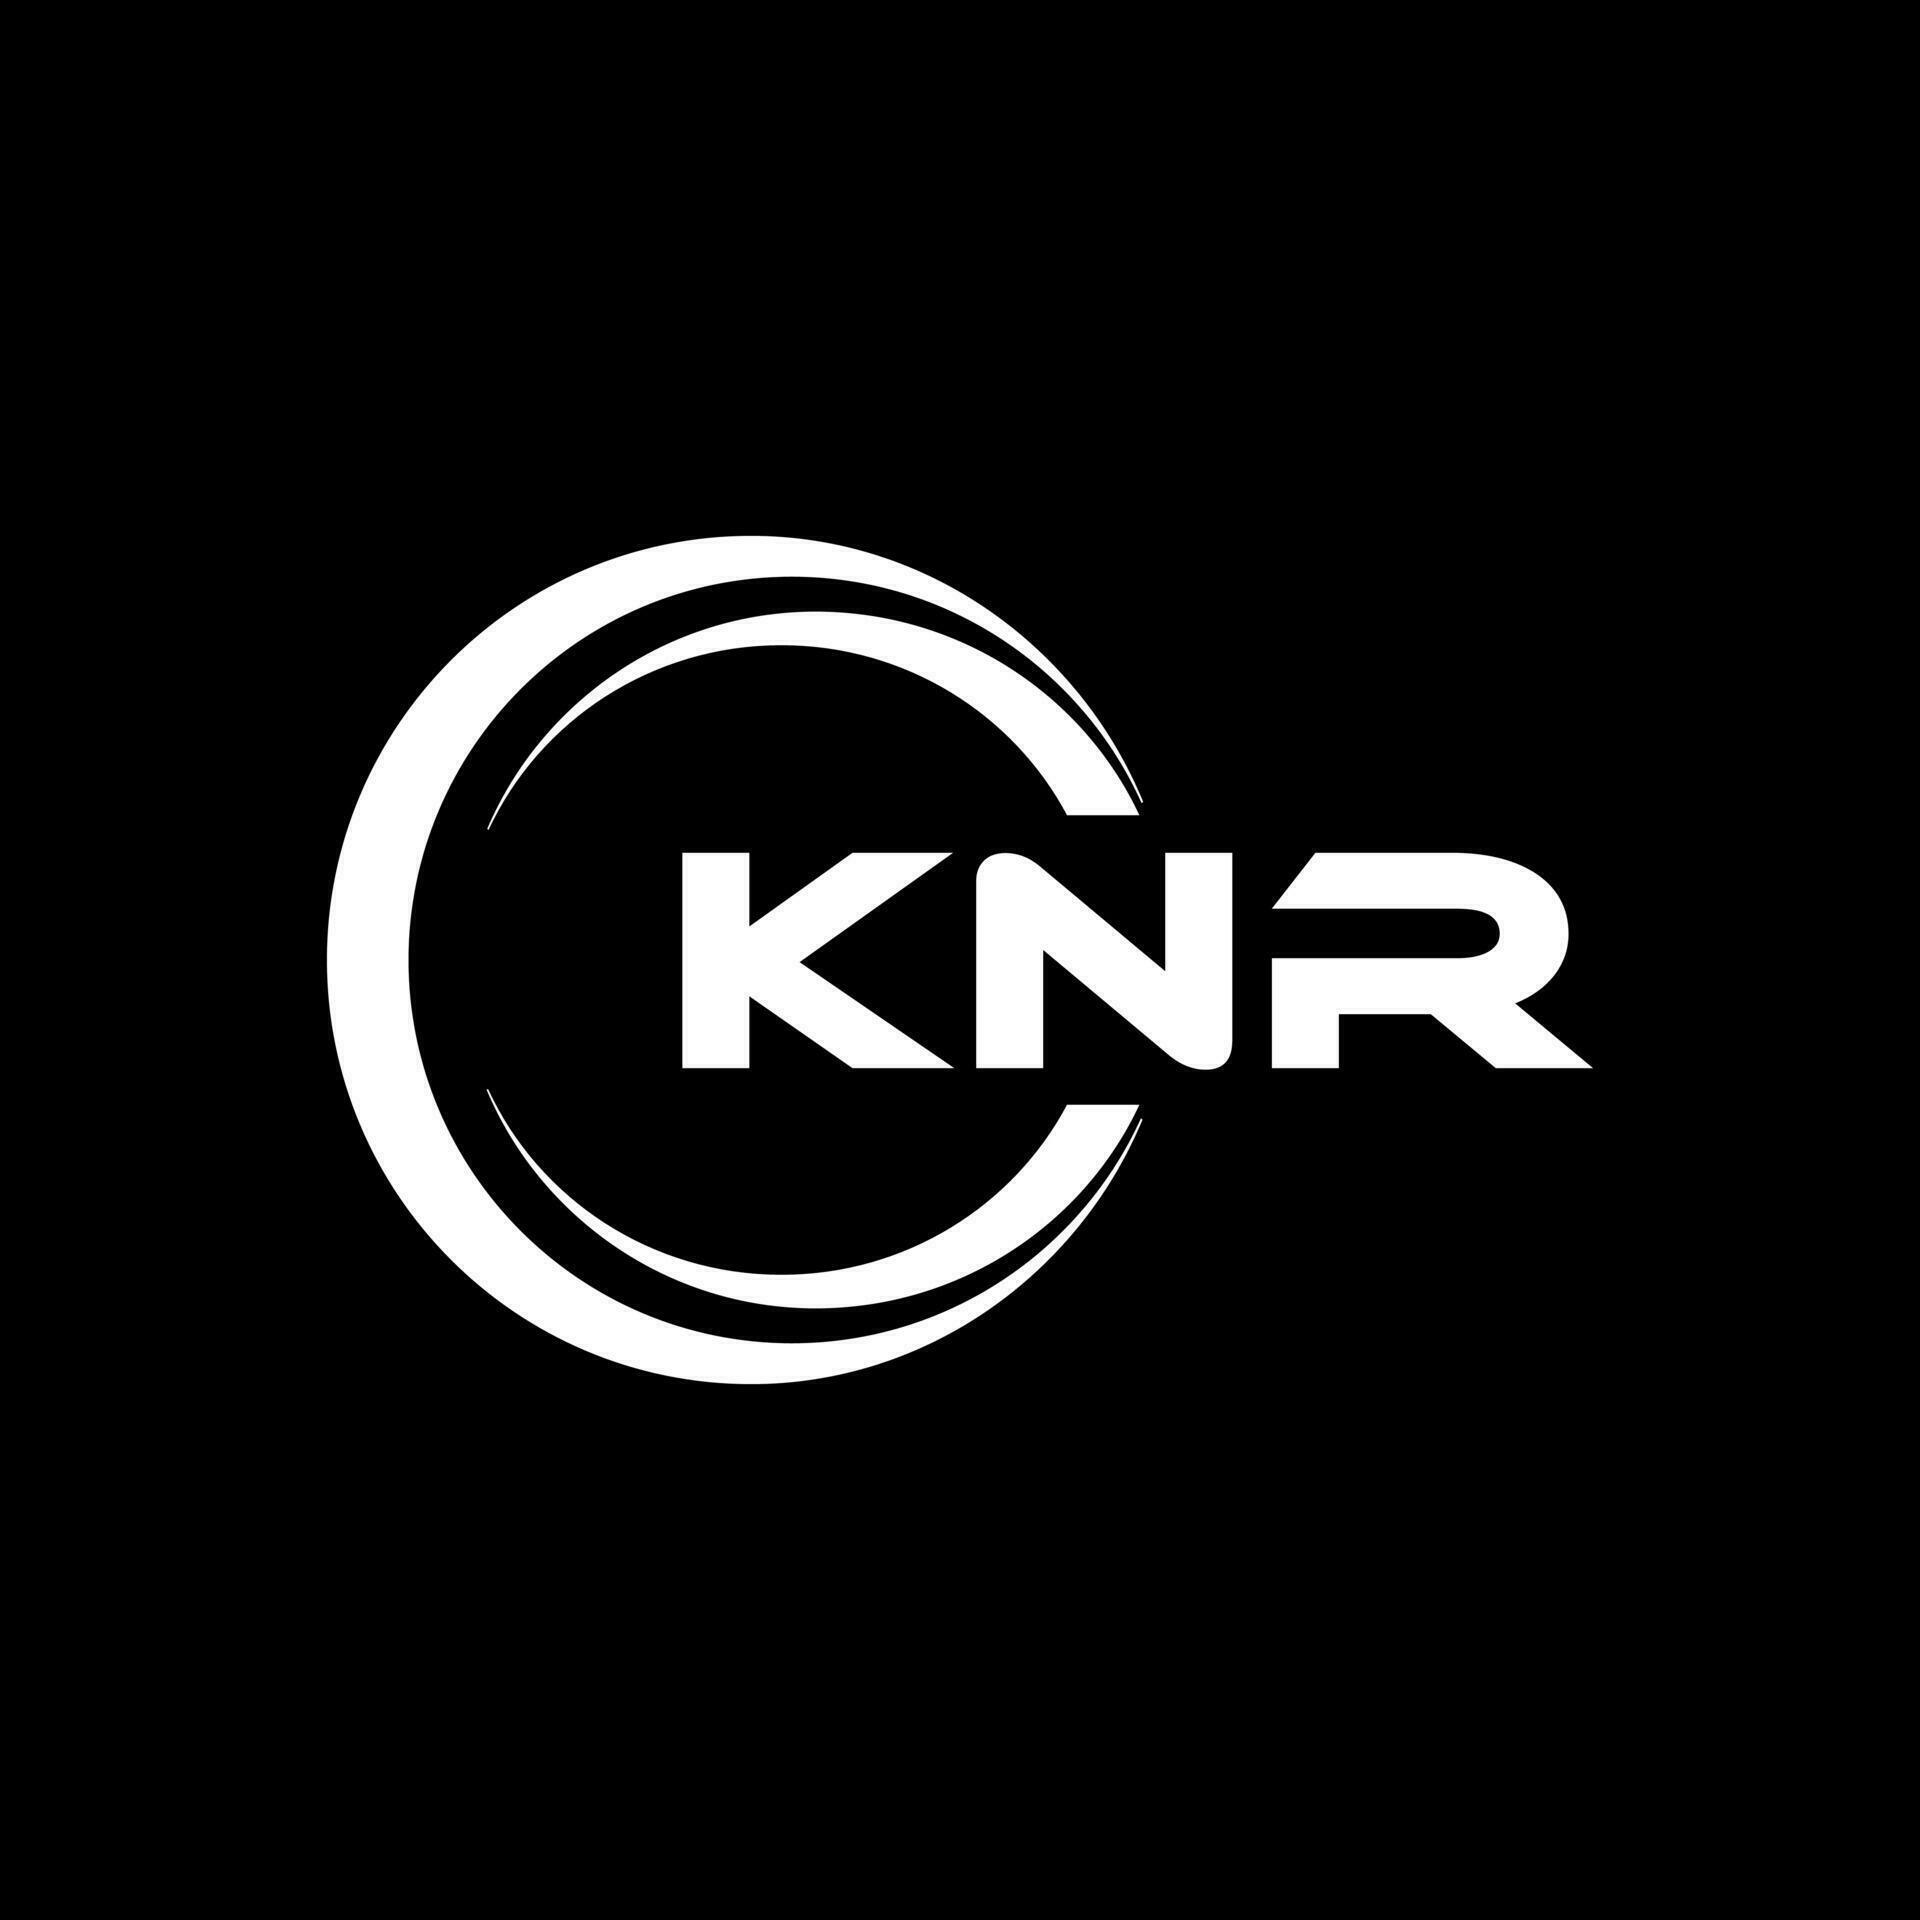 KNR letter logo design in illustration. Vector logo, calligraphy ...